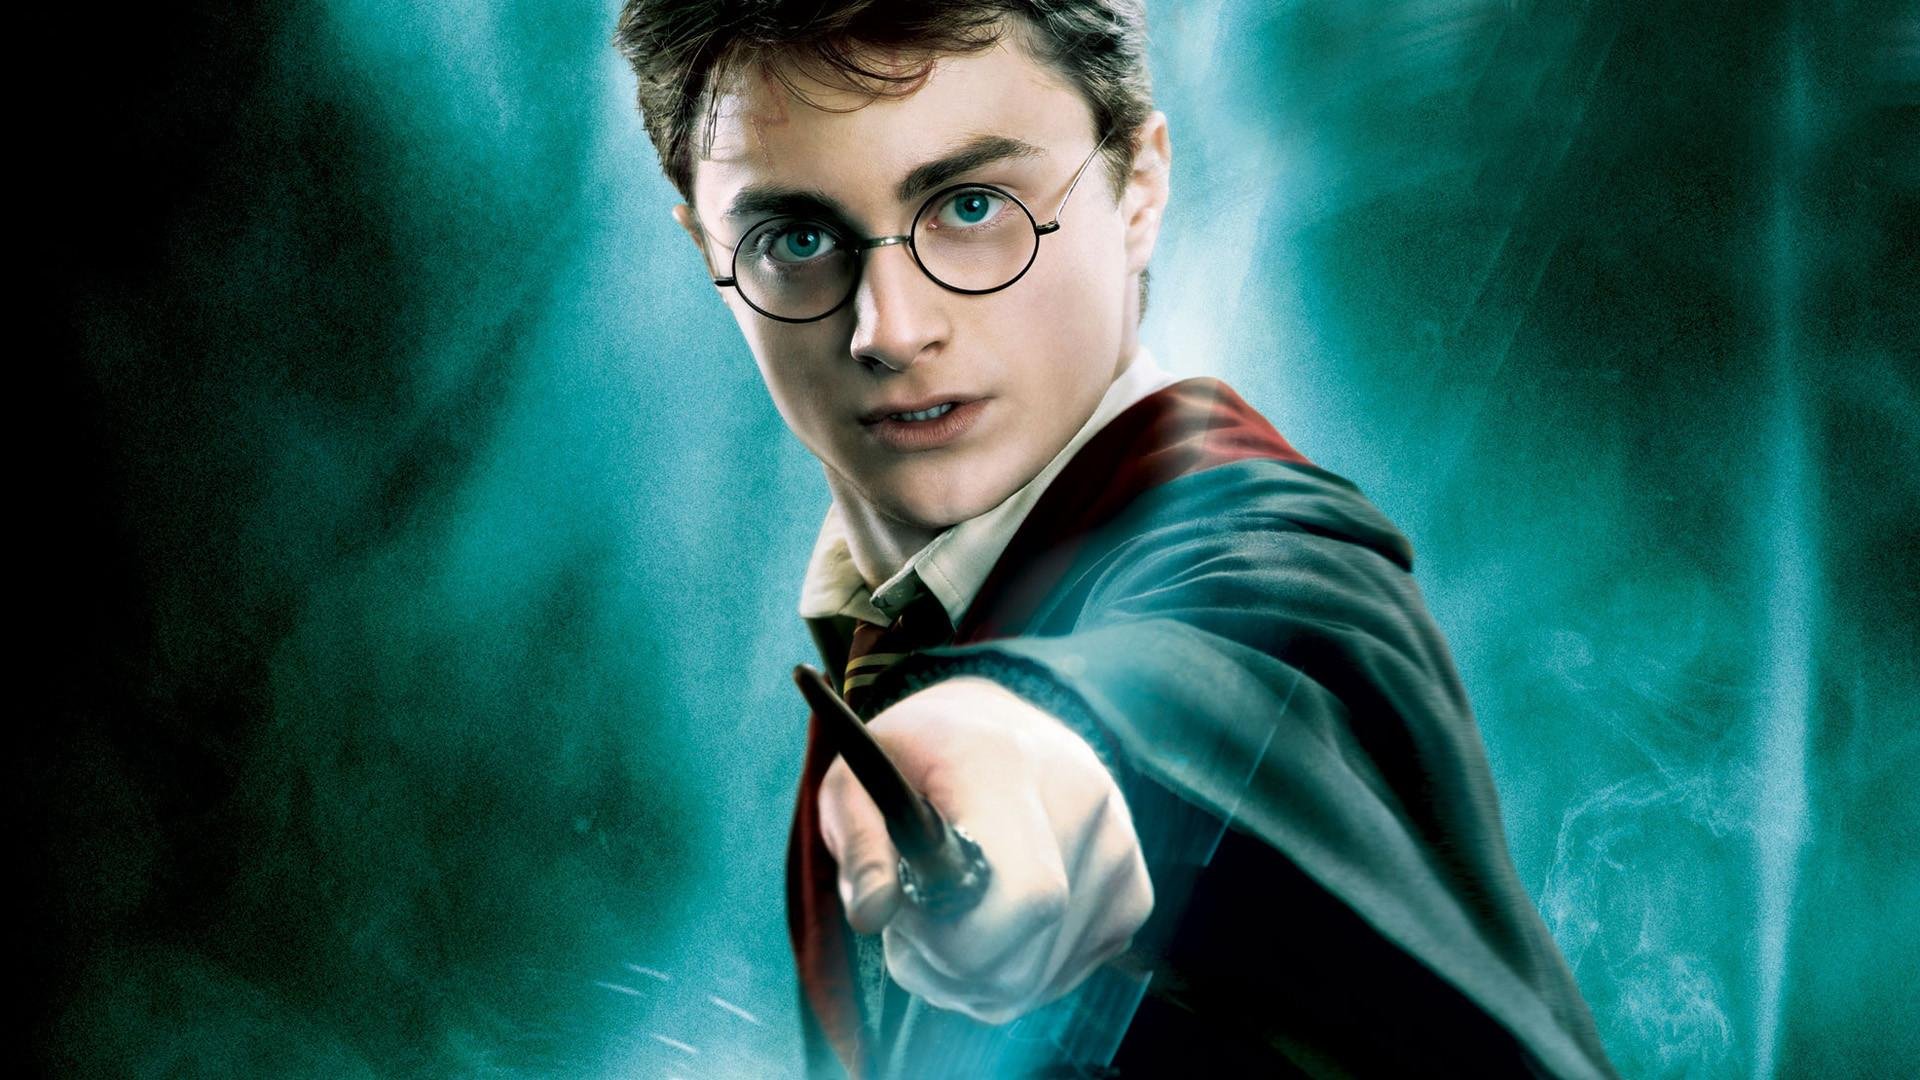 HBO Max desenvolve série de Harry Potter